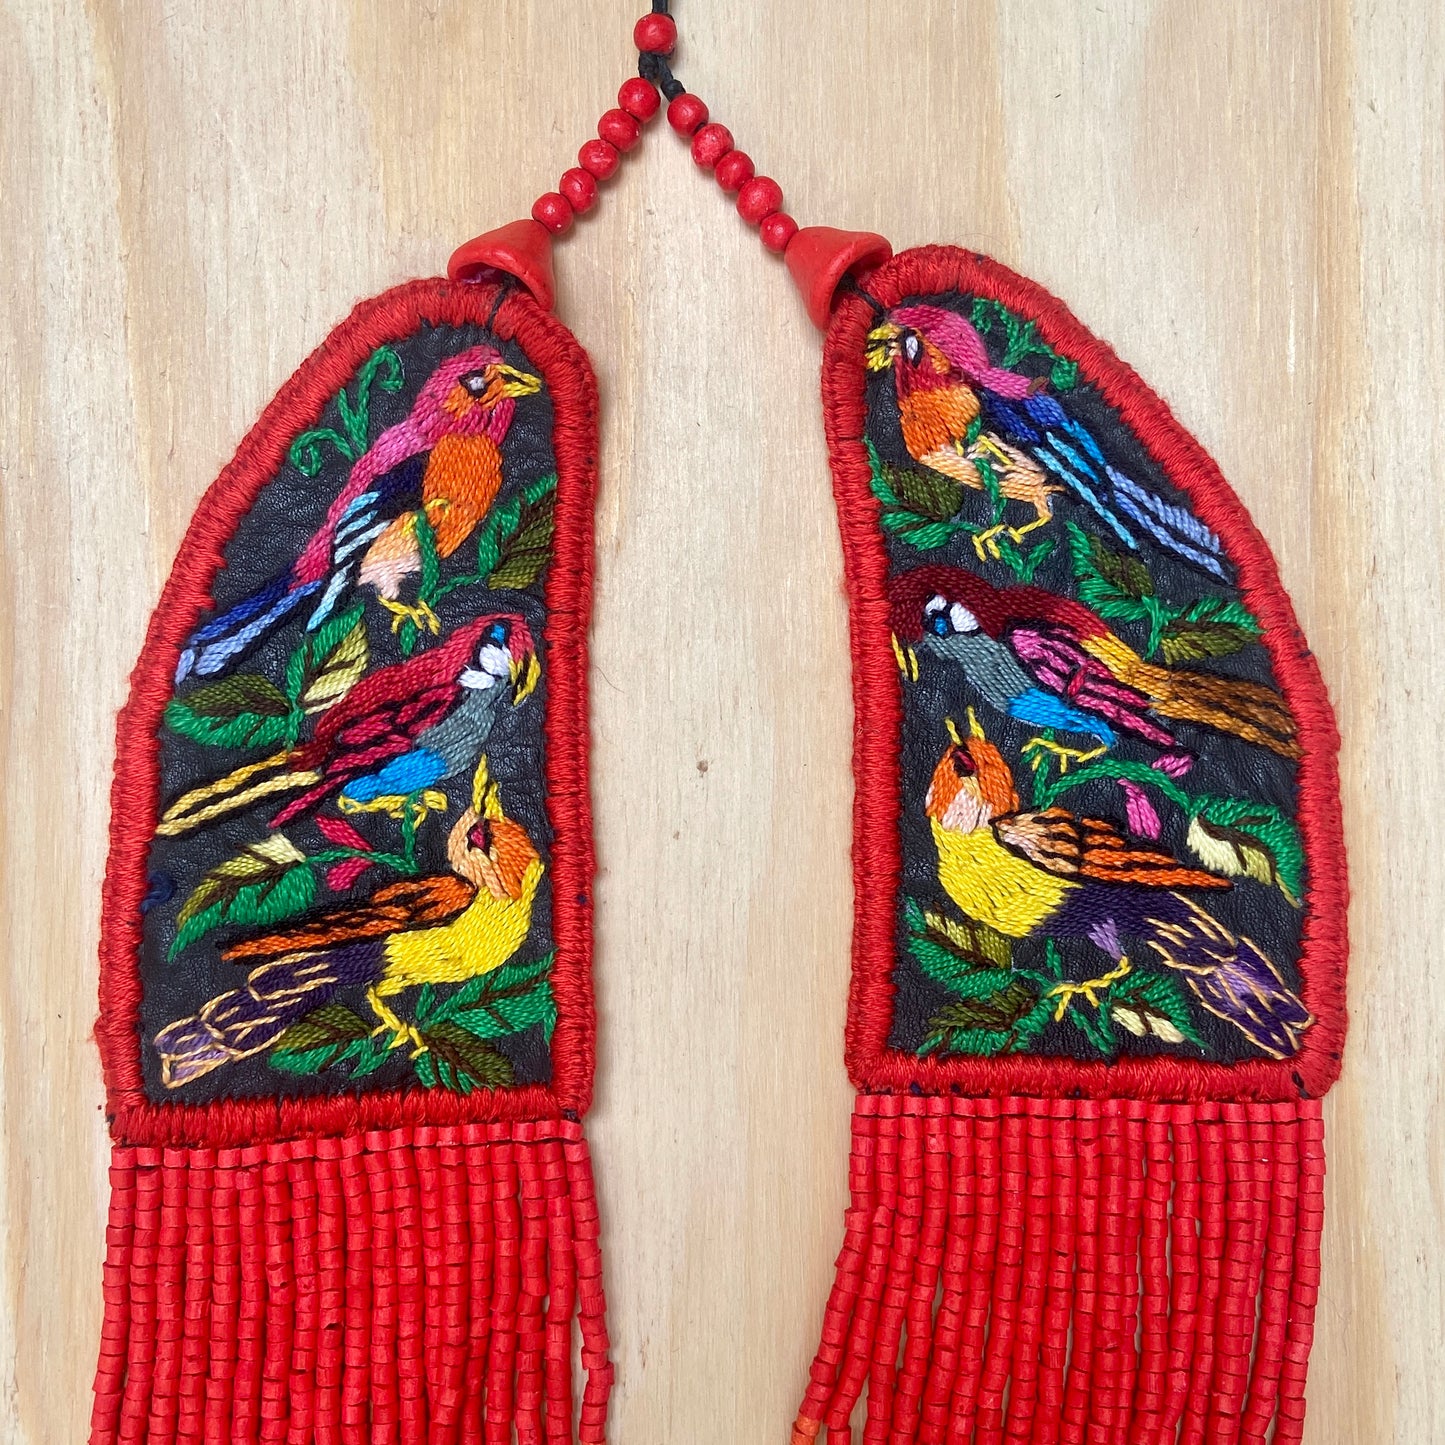 Embroidered Birds Chest Pieces with precious stones - "Santiago Birds"